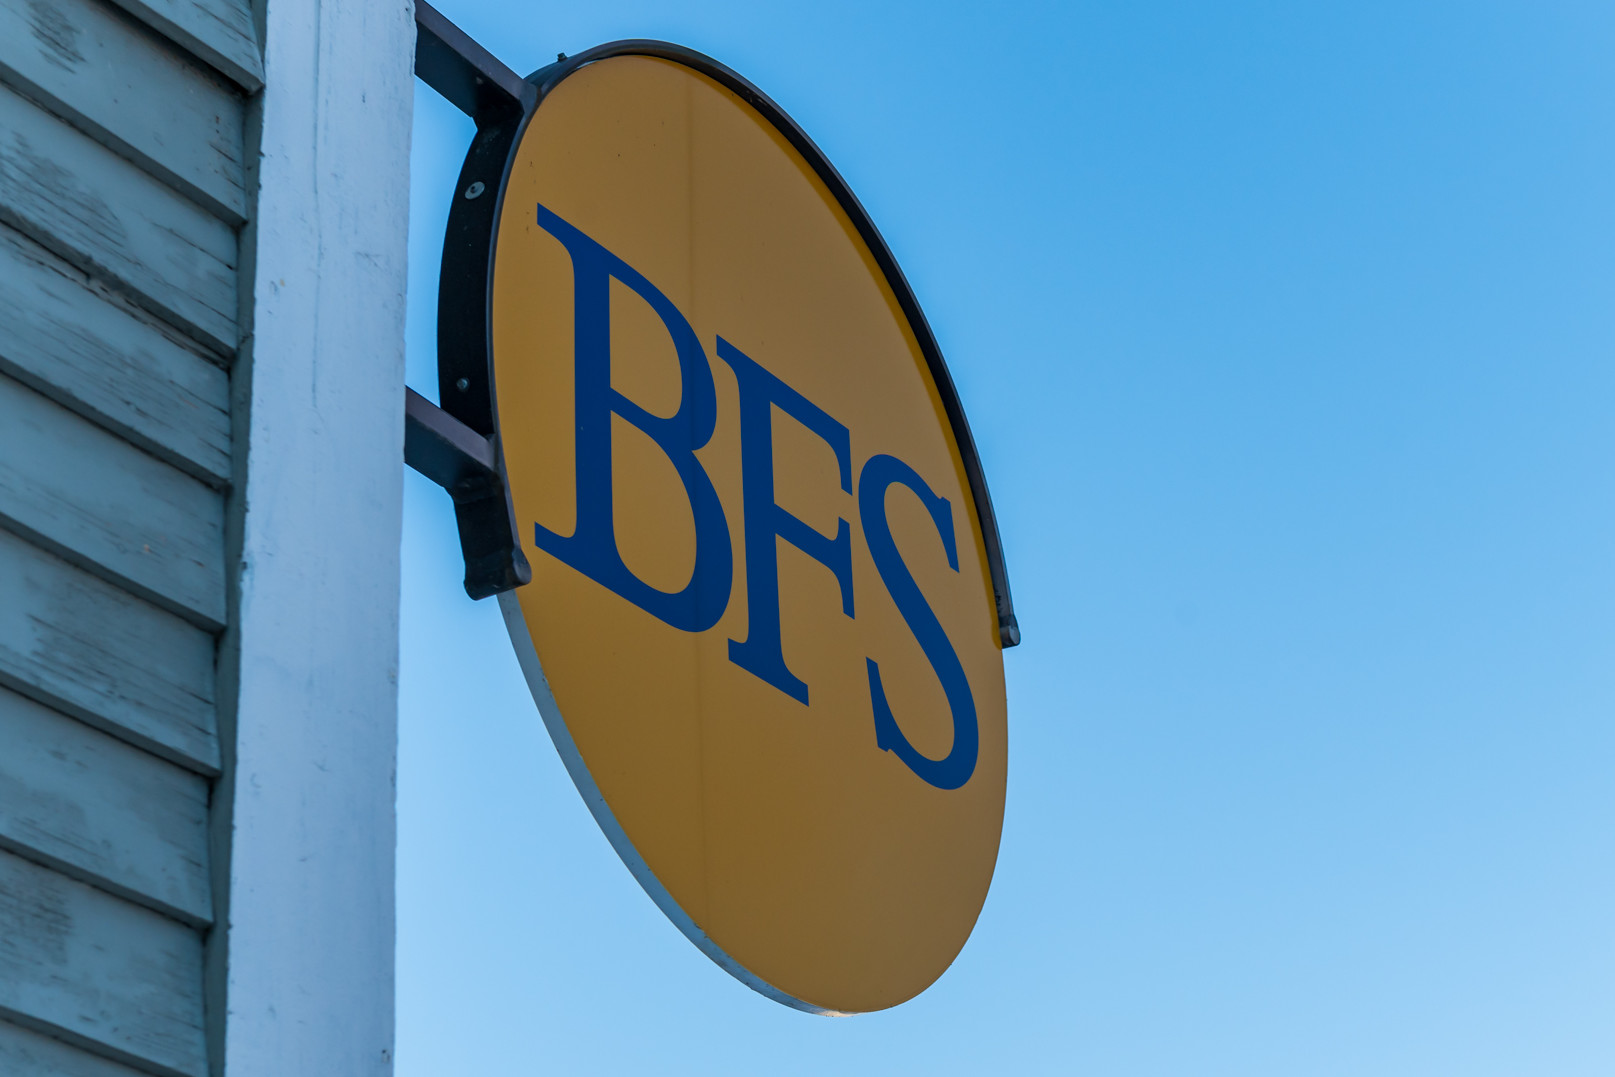 BFS Community Resources Flier